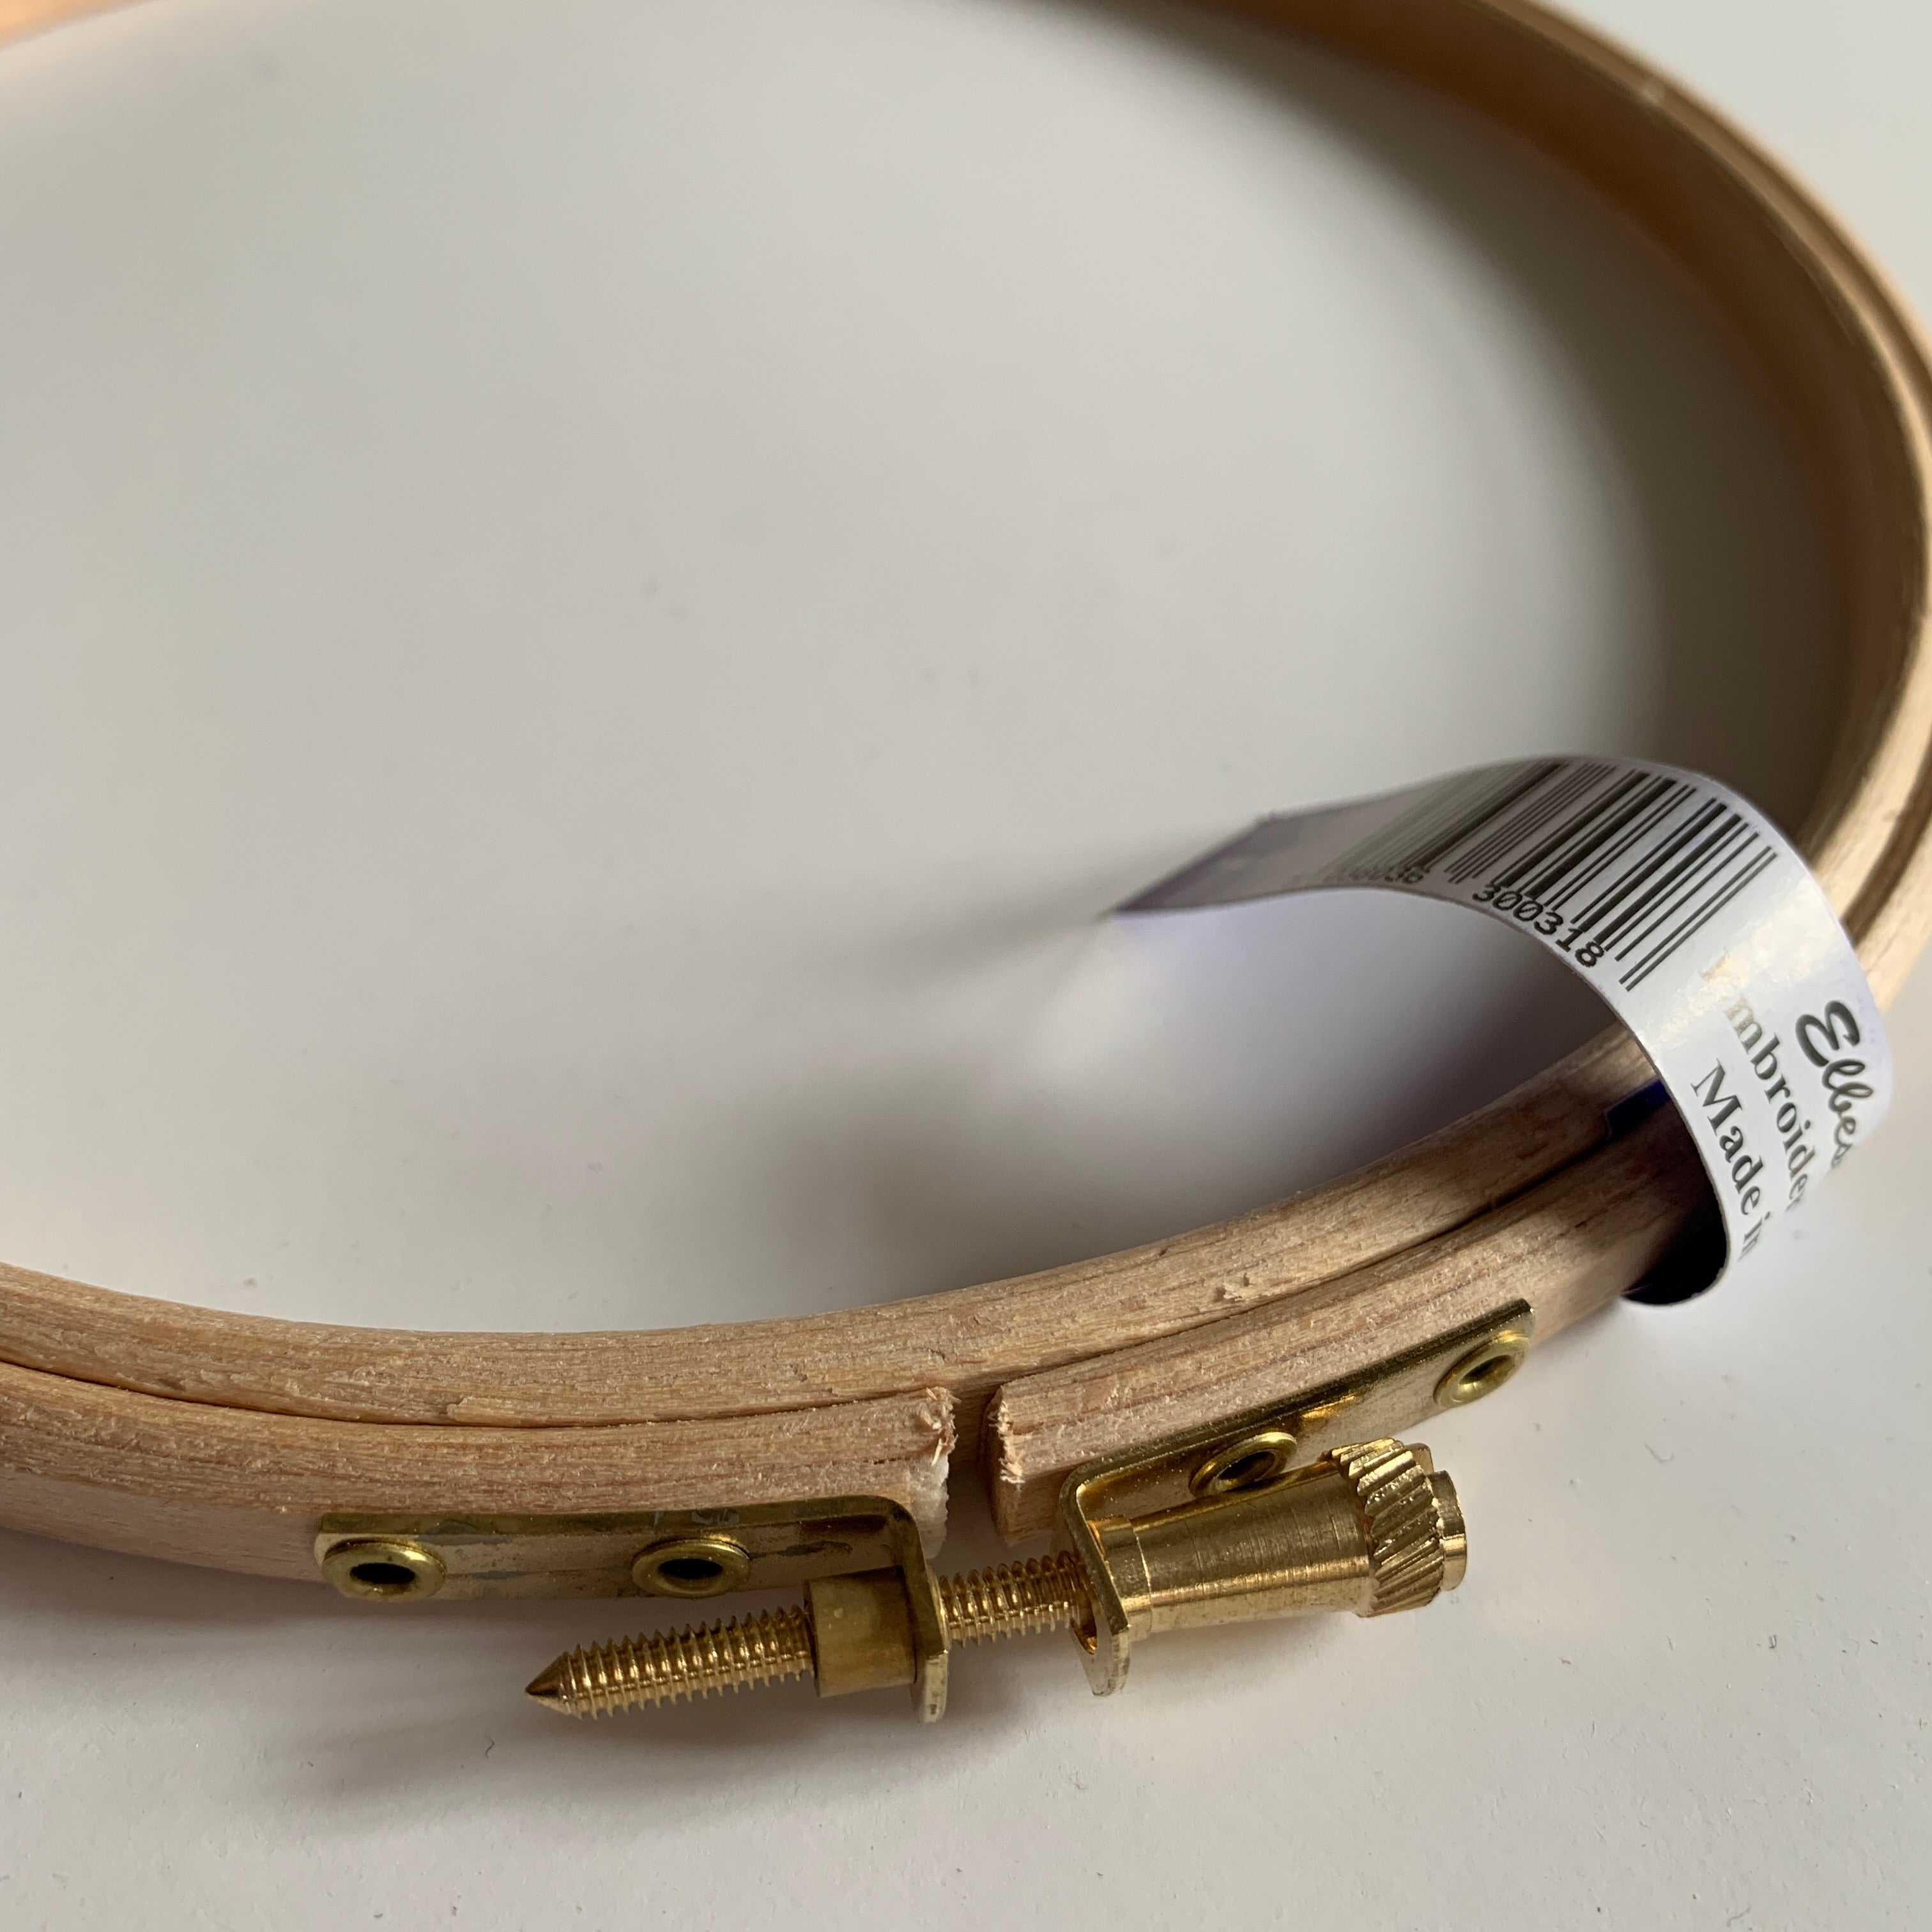 6 Inch (15 cm) Elbesee Wooden Embroidery hoop